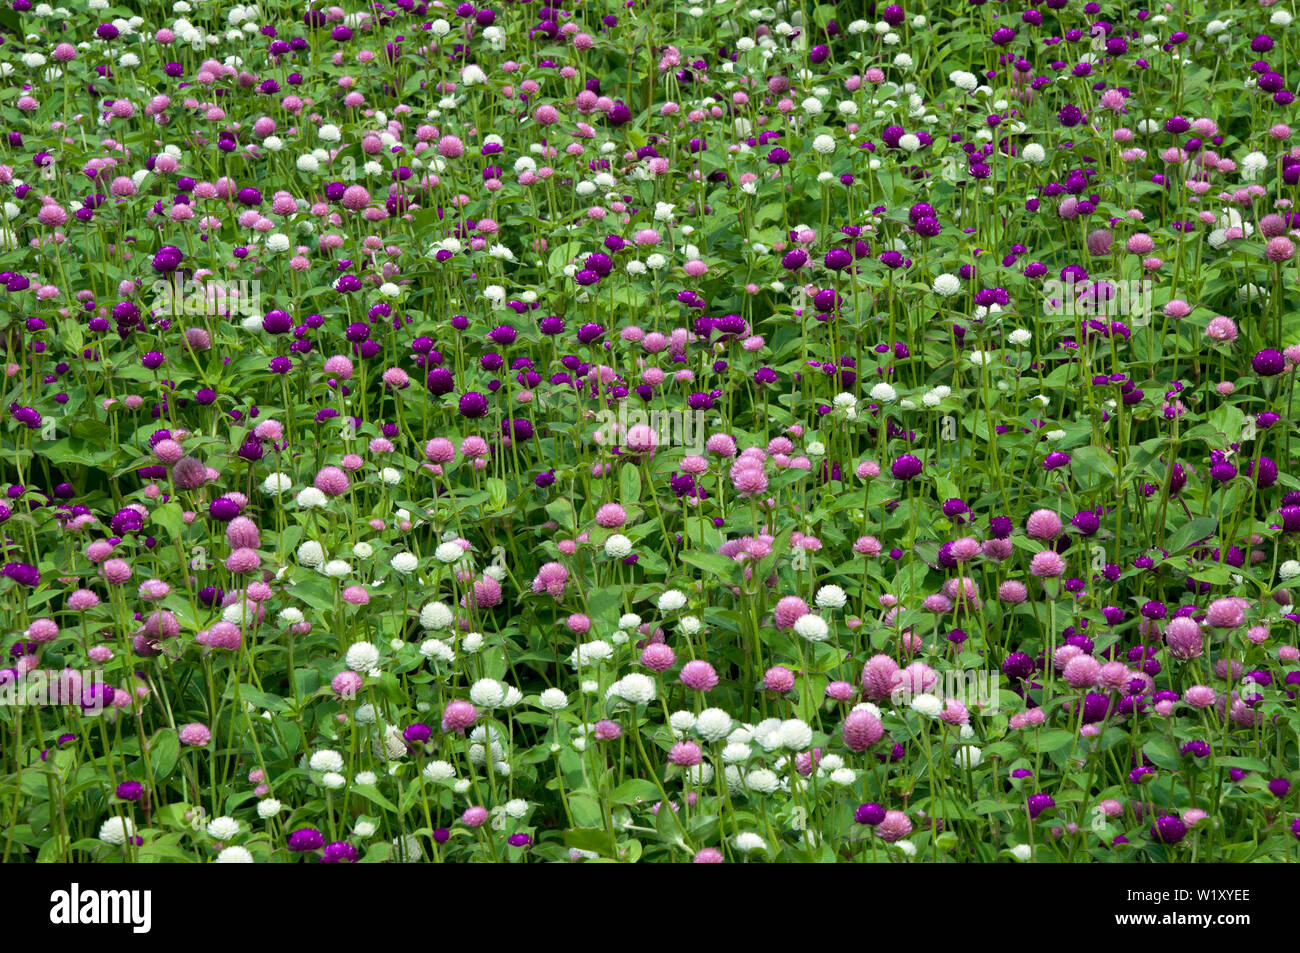 Sydney Australia, flower bed of globe amaranth flowers native to Brazil, Panama, and Guatemala. Stock Photo